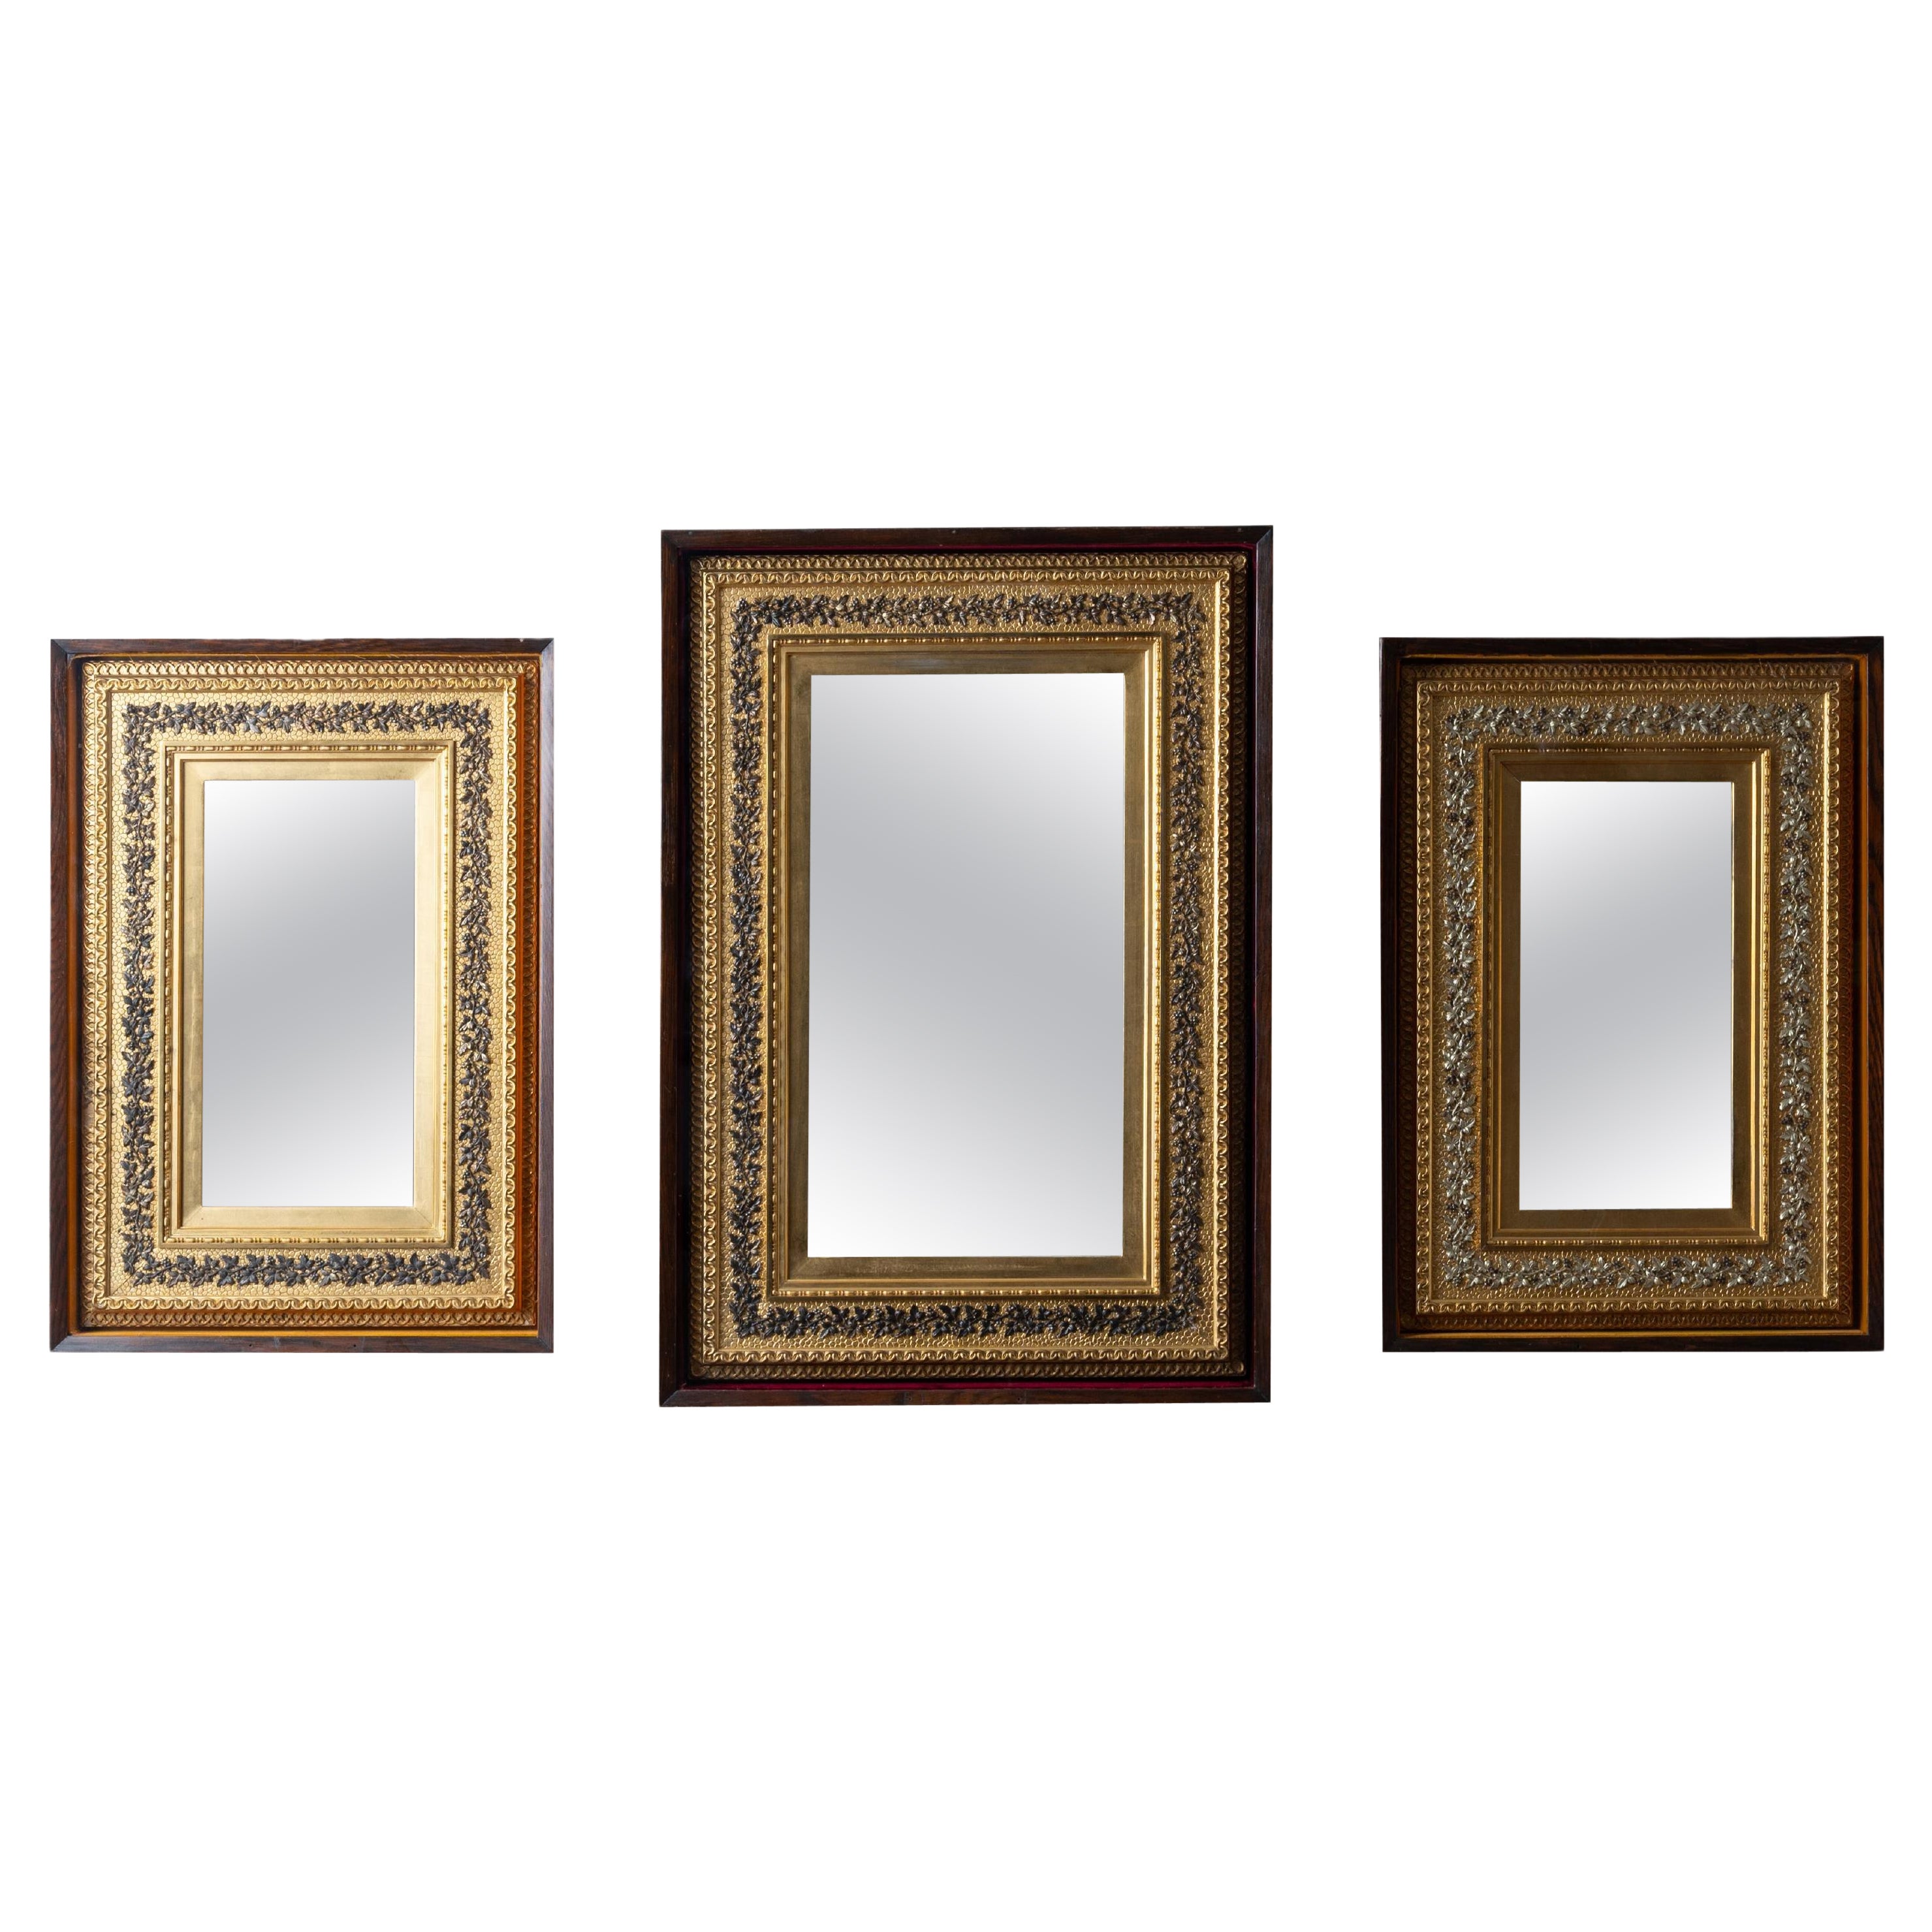 Gilt Mirrors in Shadowbox Frames, c.1890, set of 3